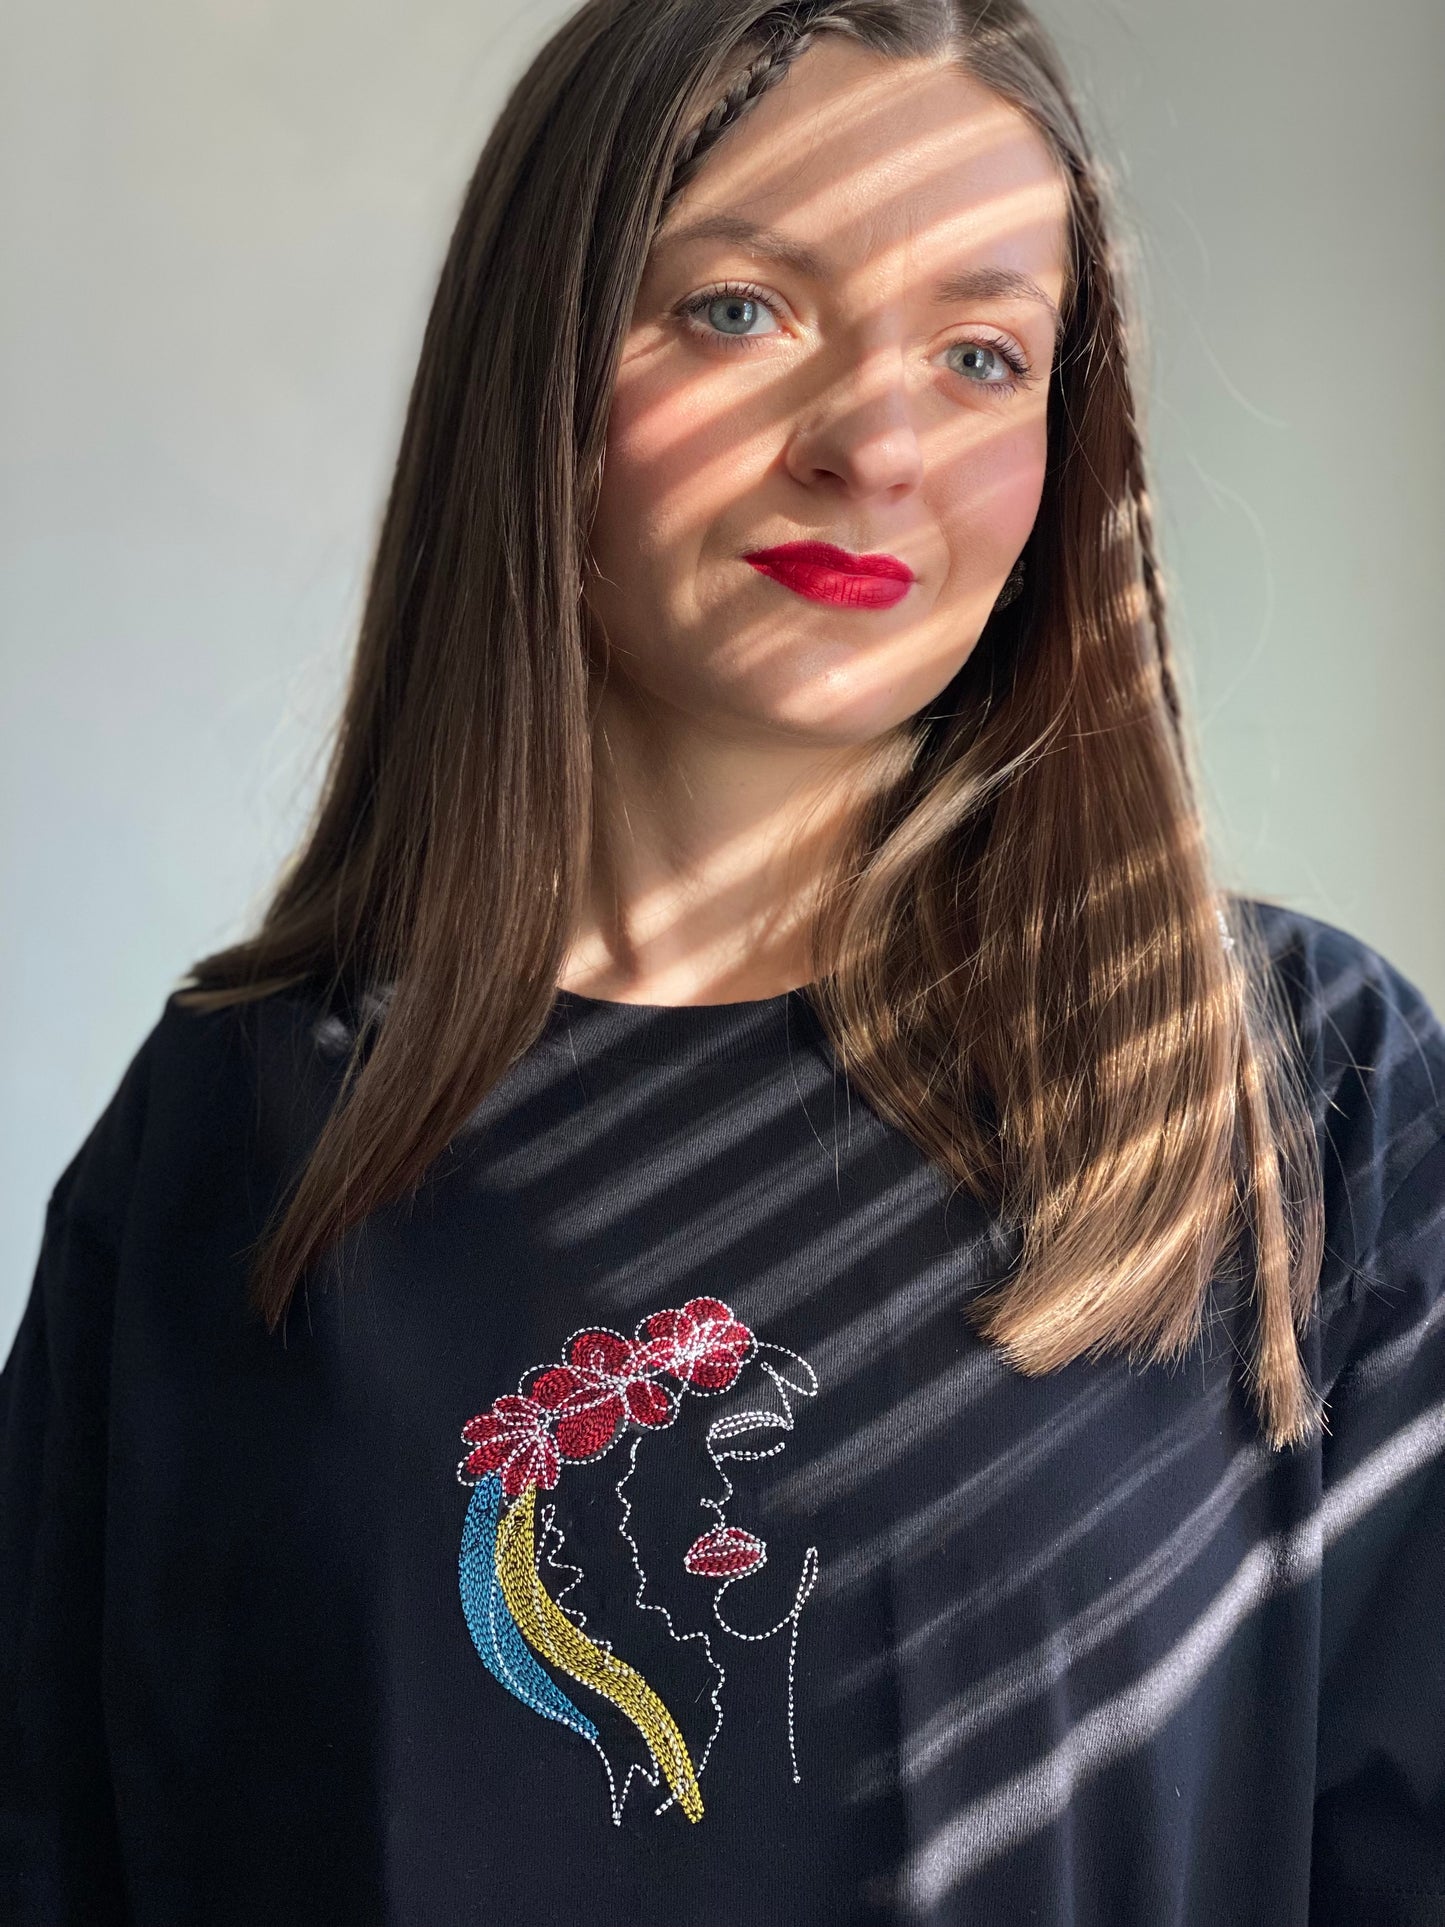 ukrainian girl woman embroidery patriotic t-shirt